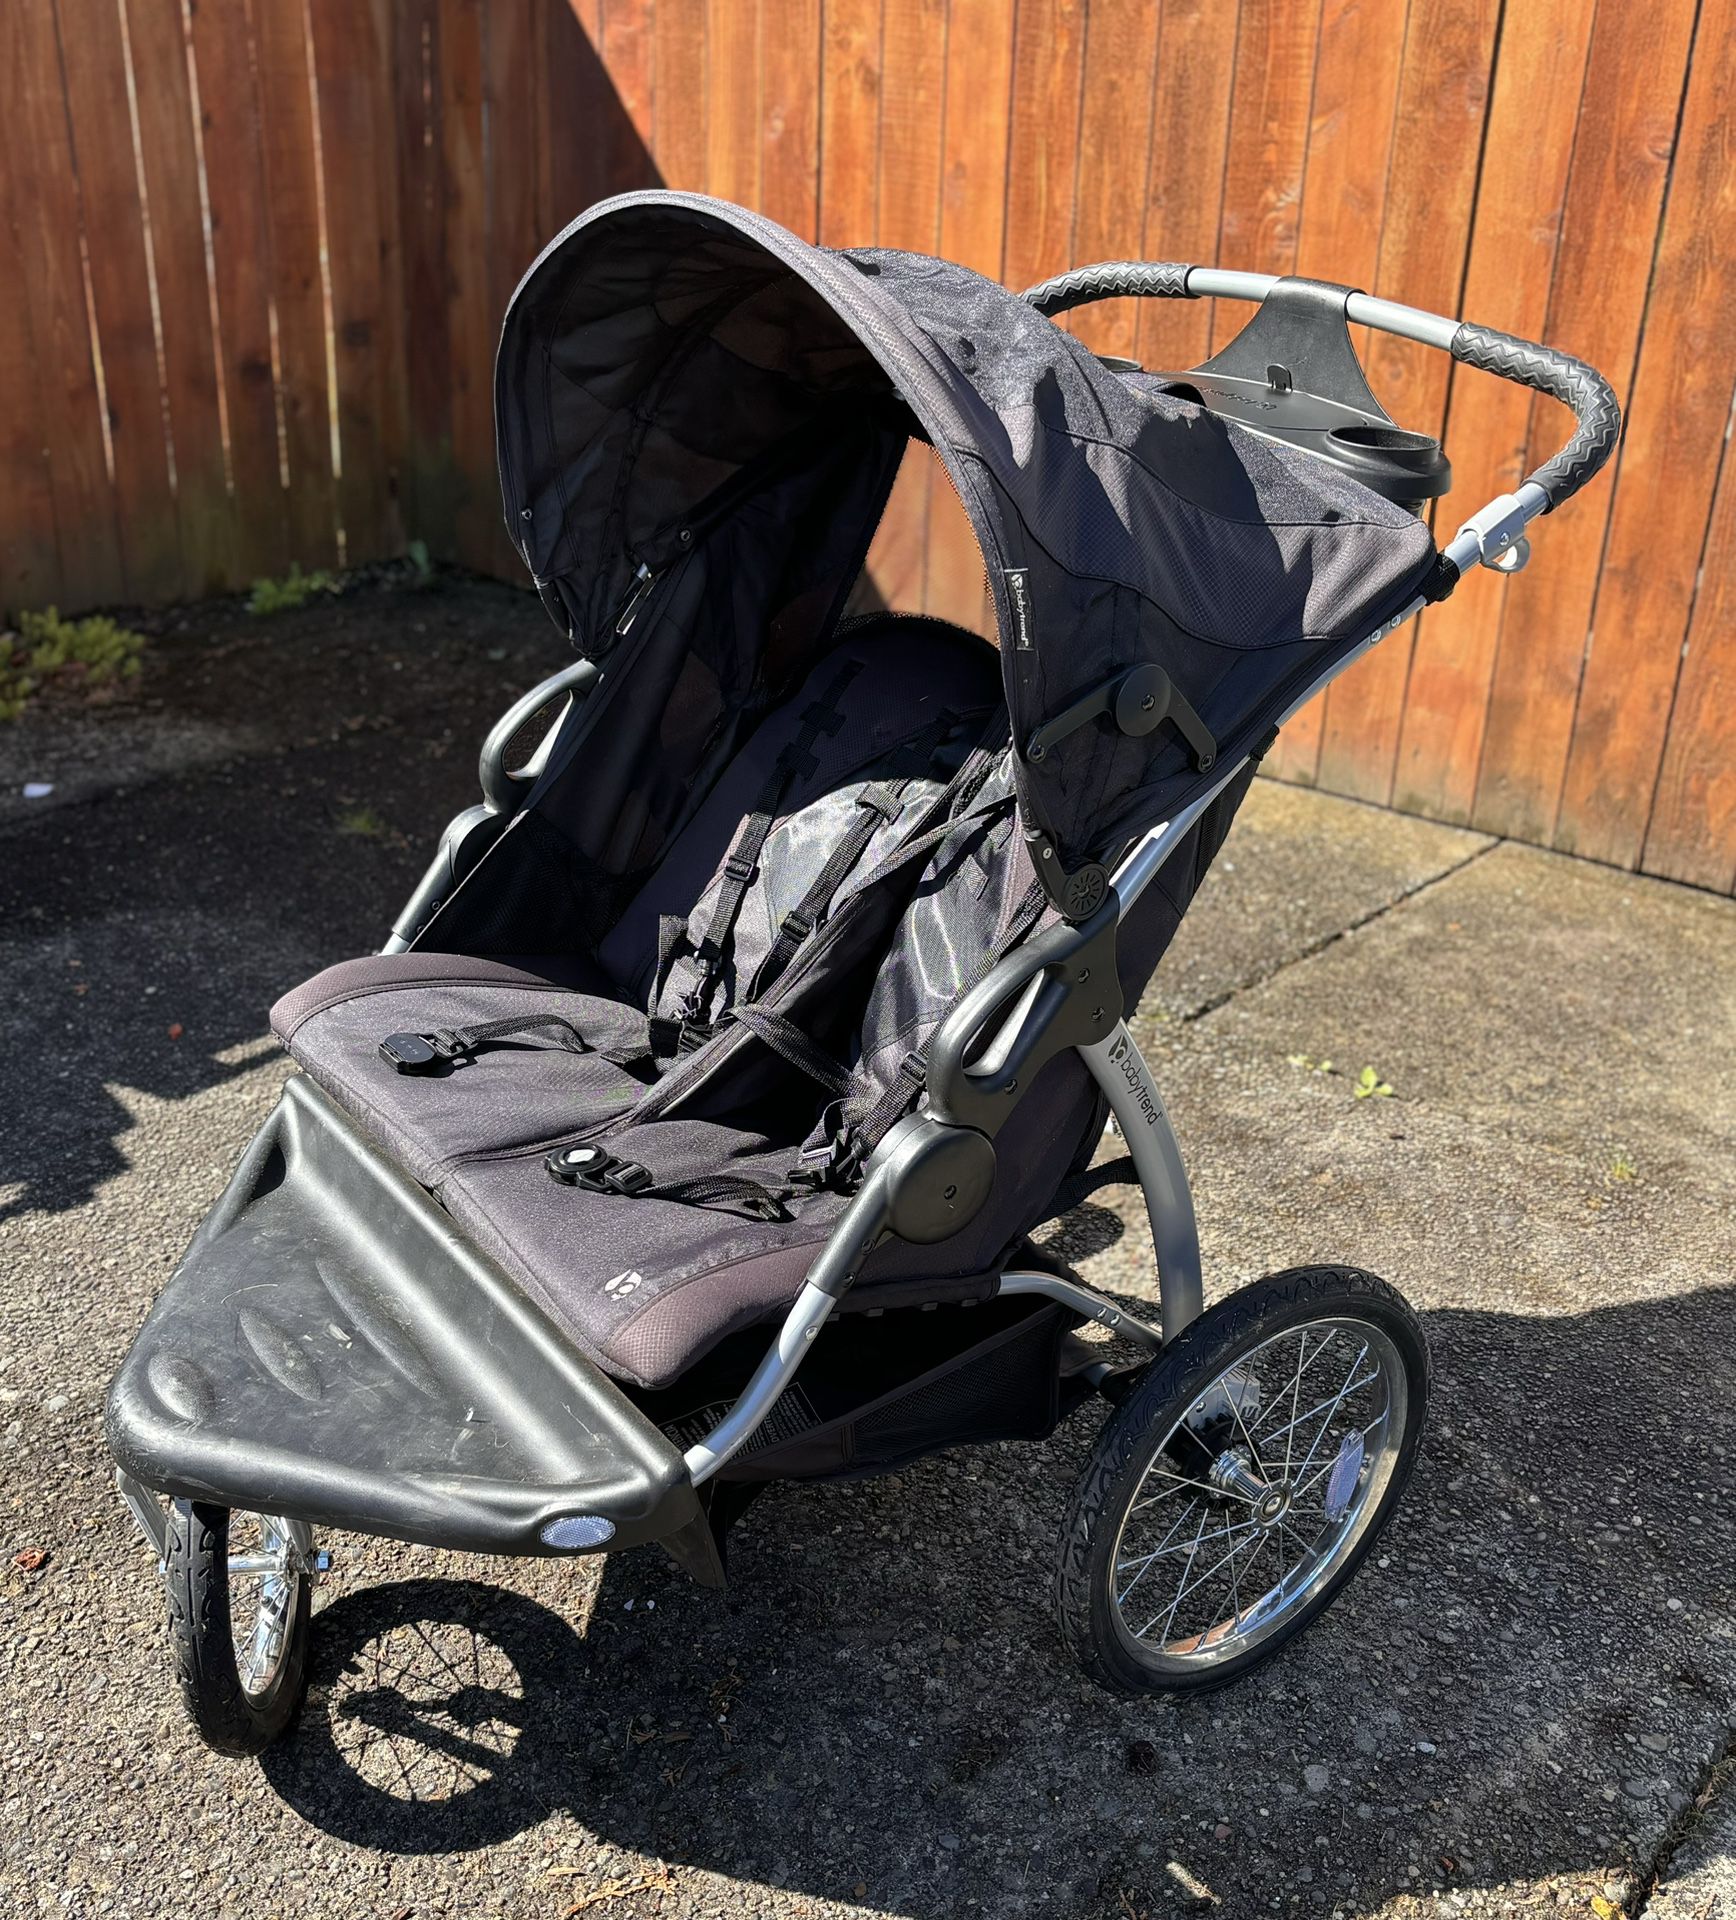 BabyTrend Double Jogging Stroller